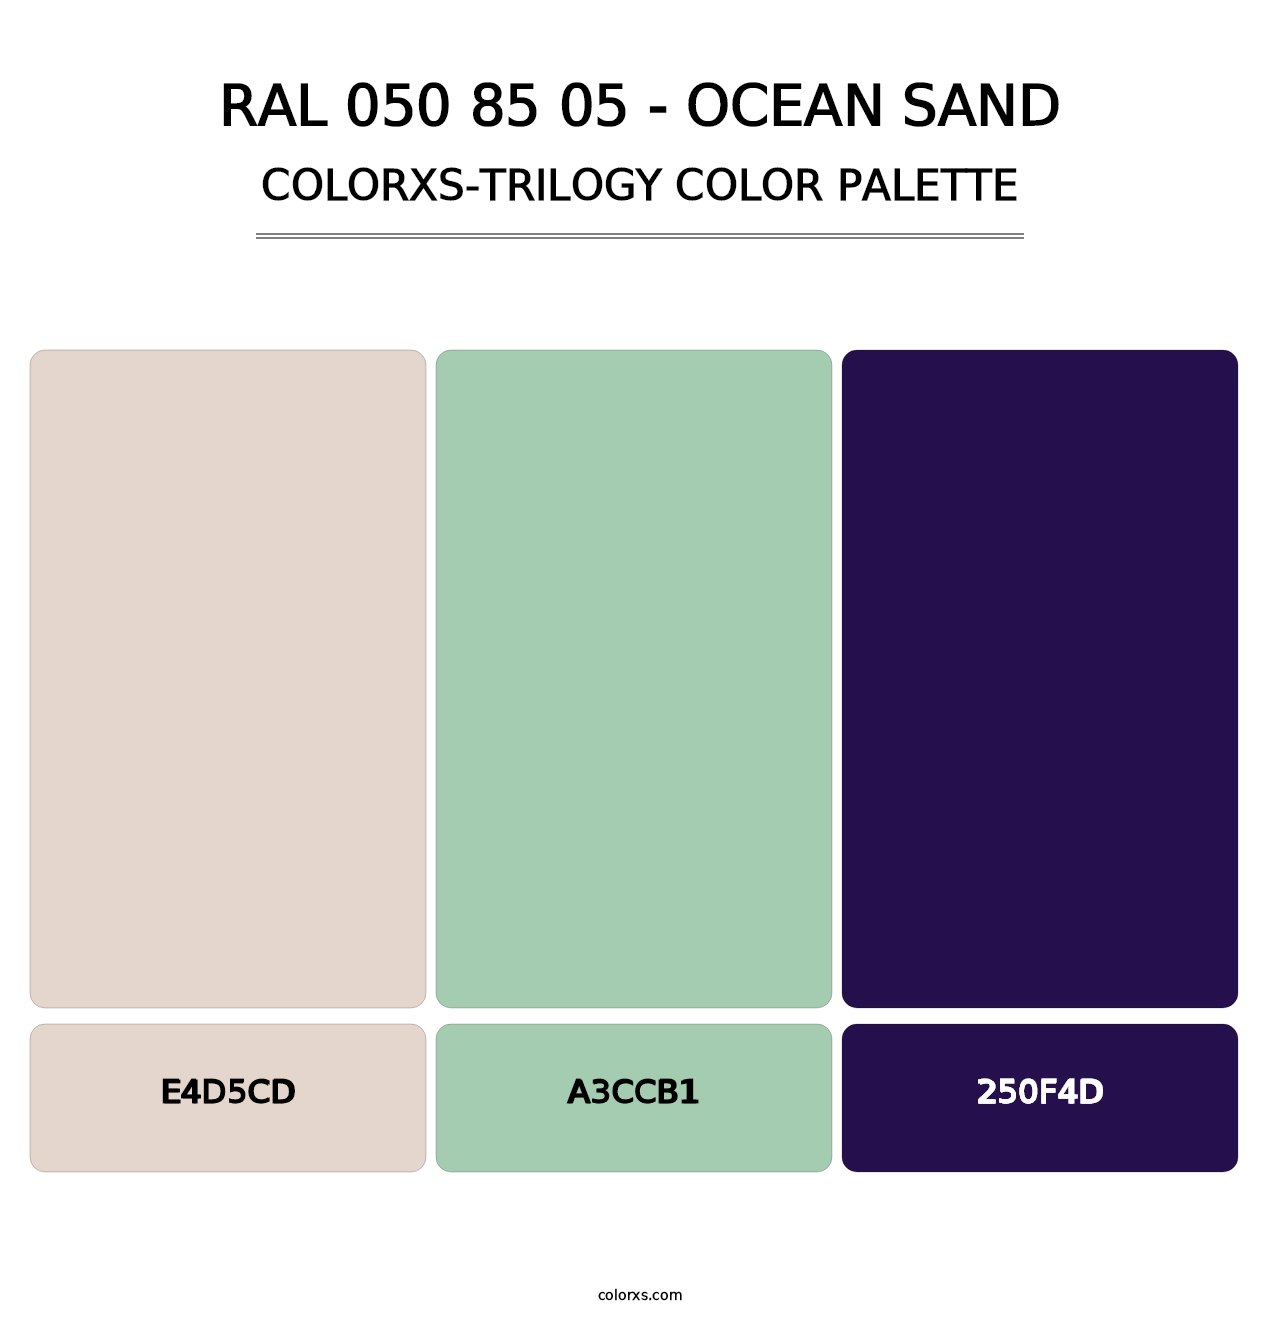 RAL 050 85 05 - Ocean Sand - Colorxs Trilogy Palette